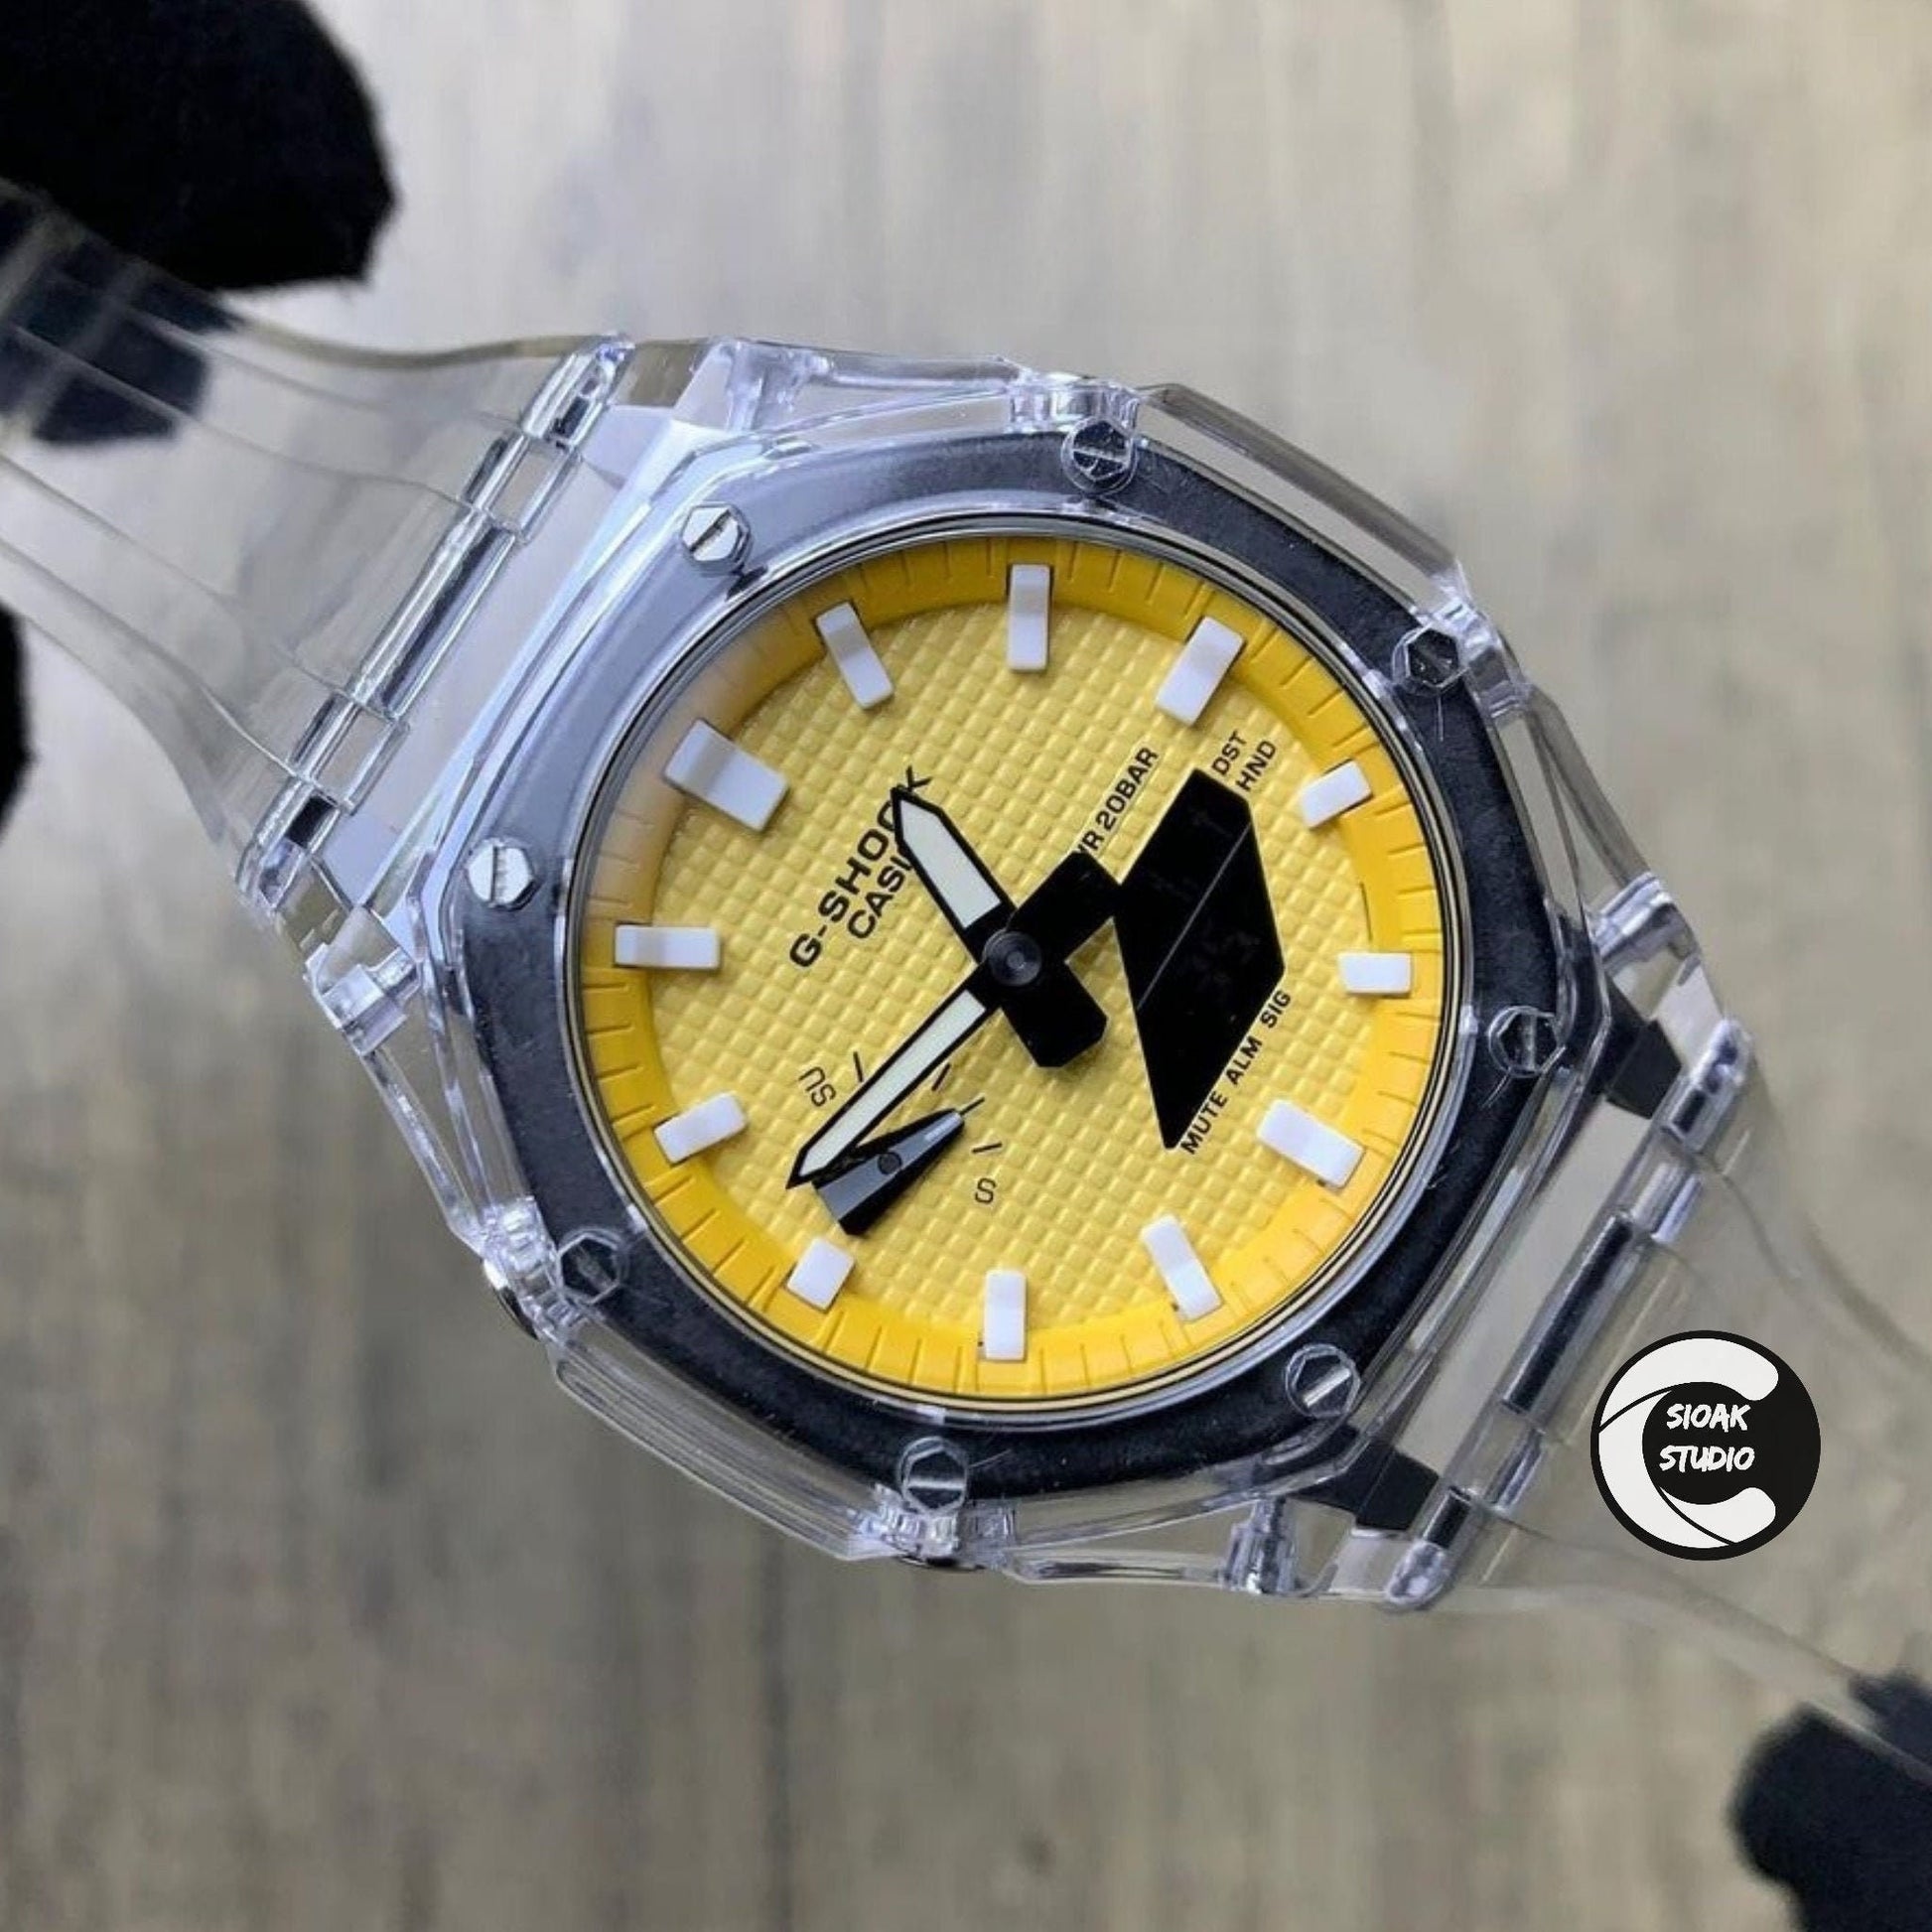 Casioak Mod Watch Transparent Case  Strap Yellow White Time Mark Yellow Dial 44mm - Casioak Studio